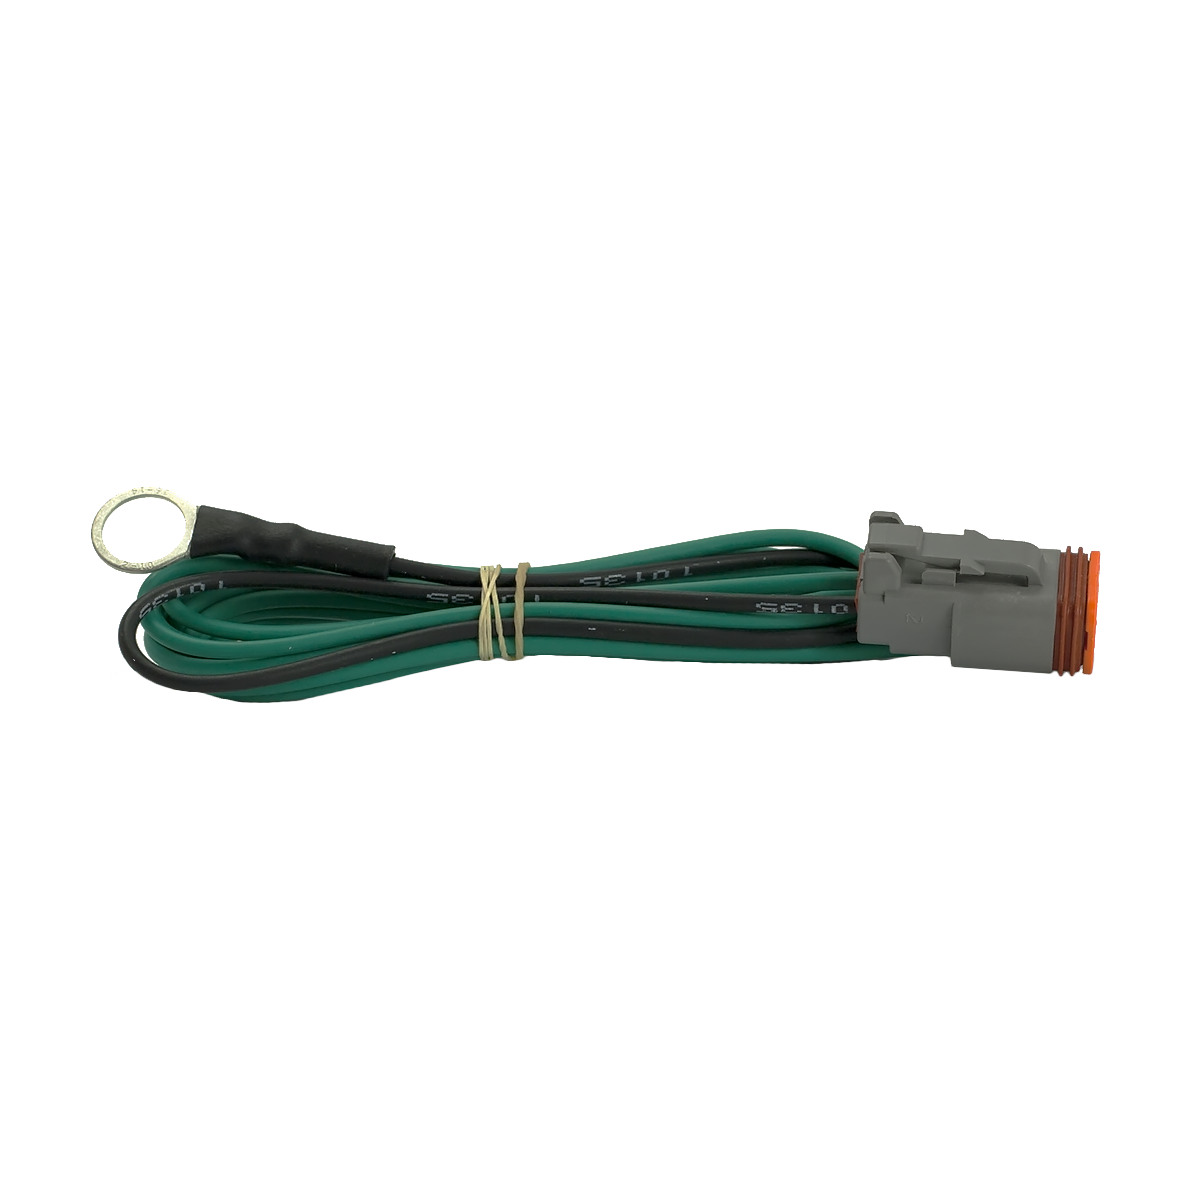 WIF wiring harness deutsch connector stock image